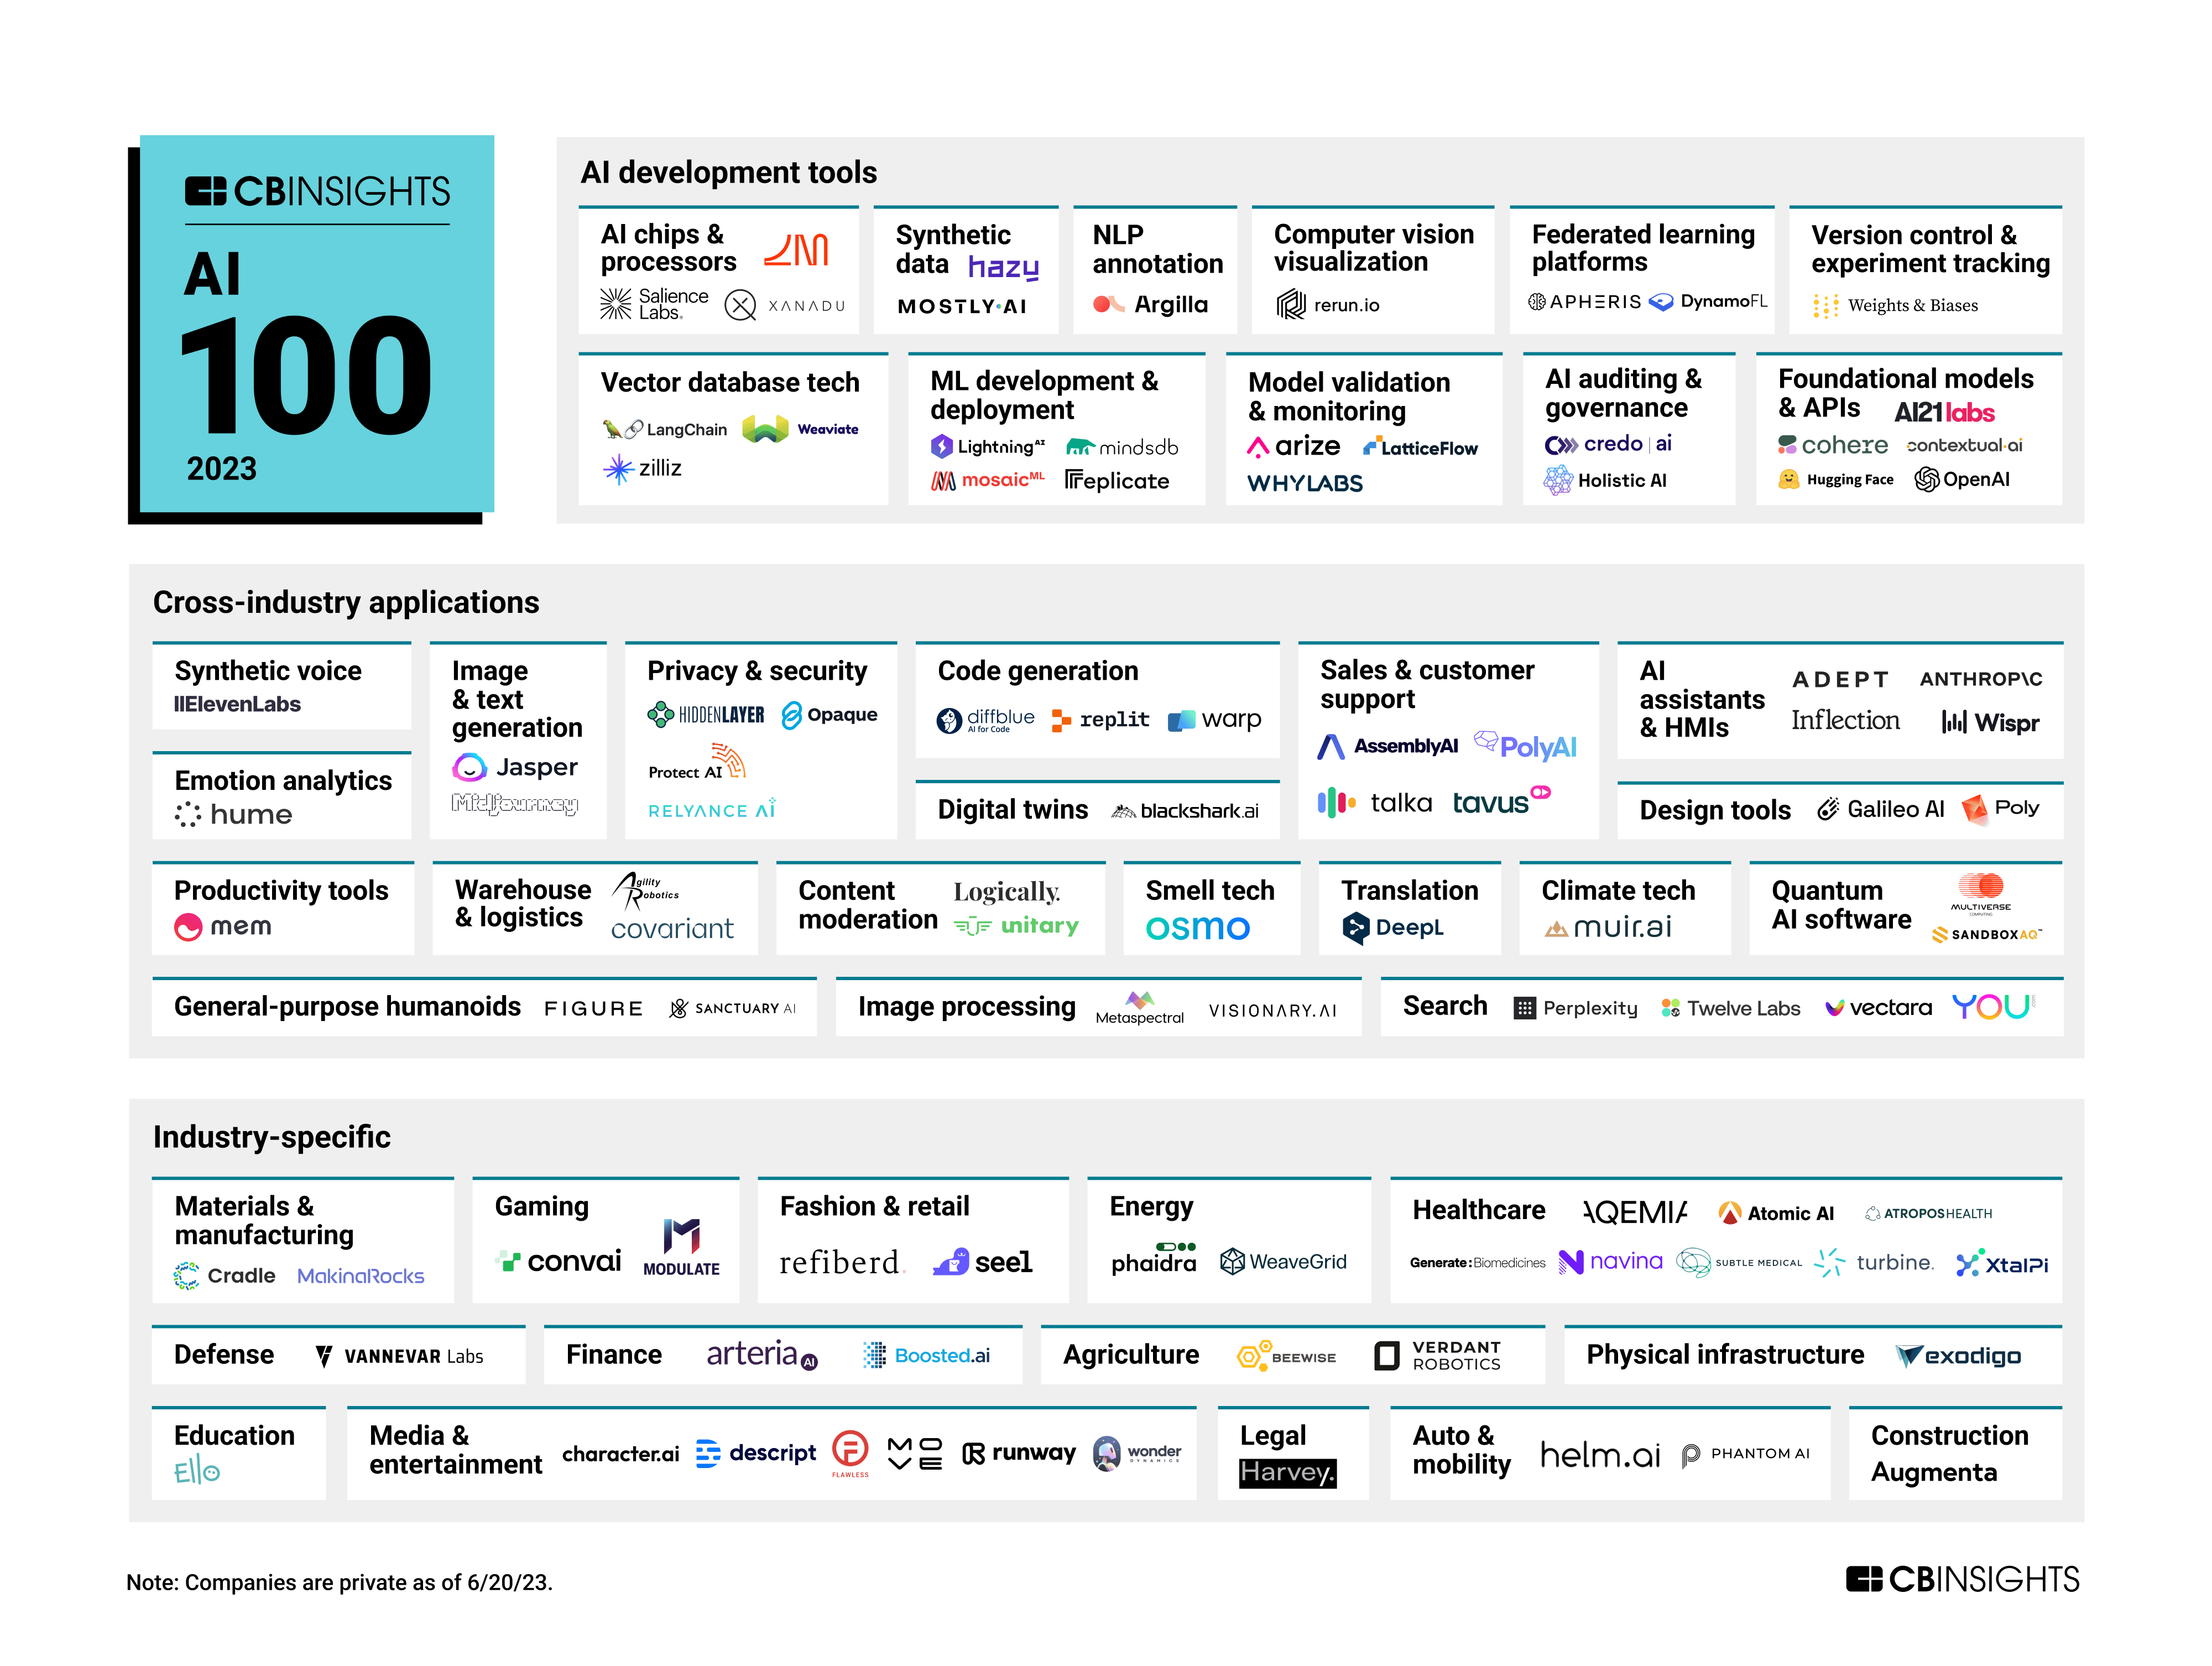 Top 10 MVP Development Companies For Startups in 2023